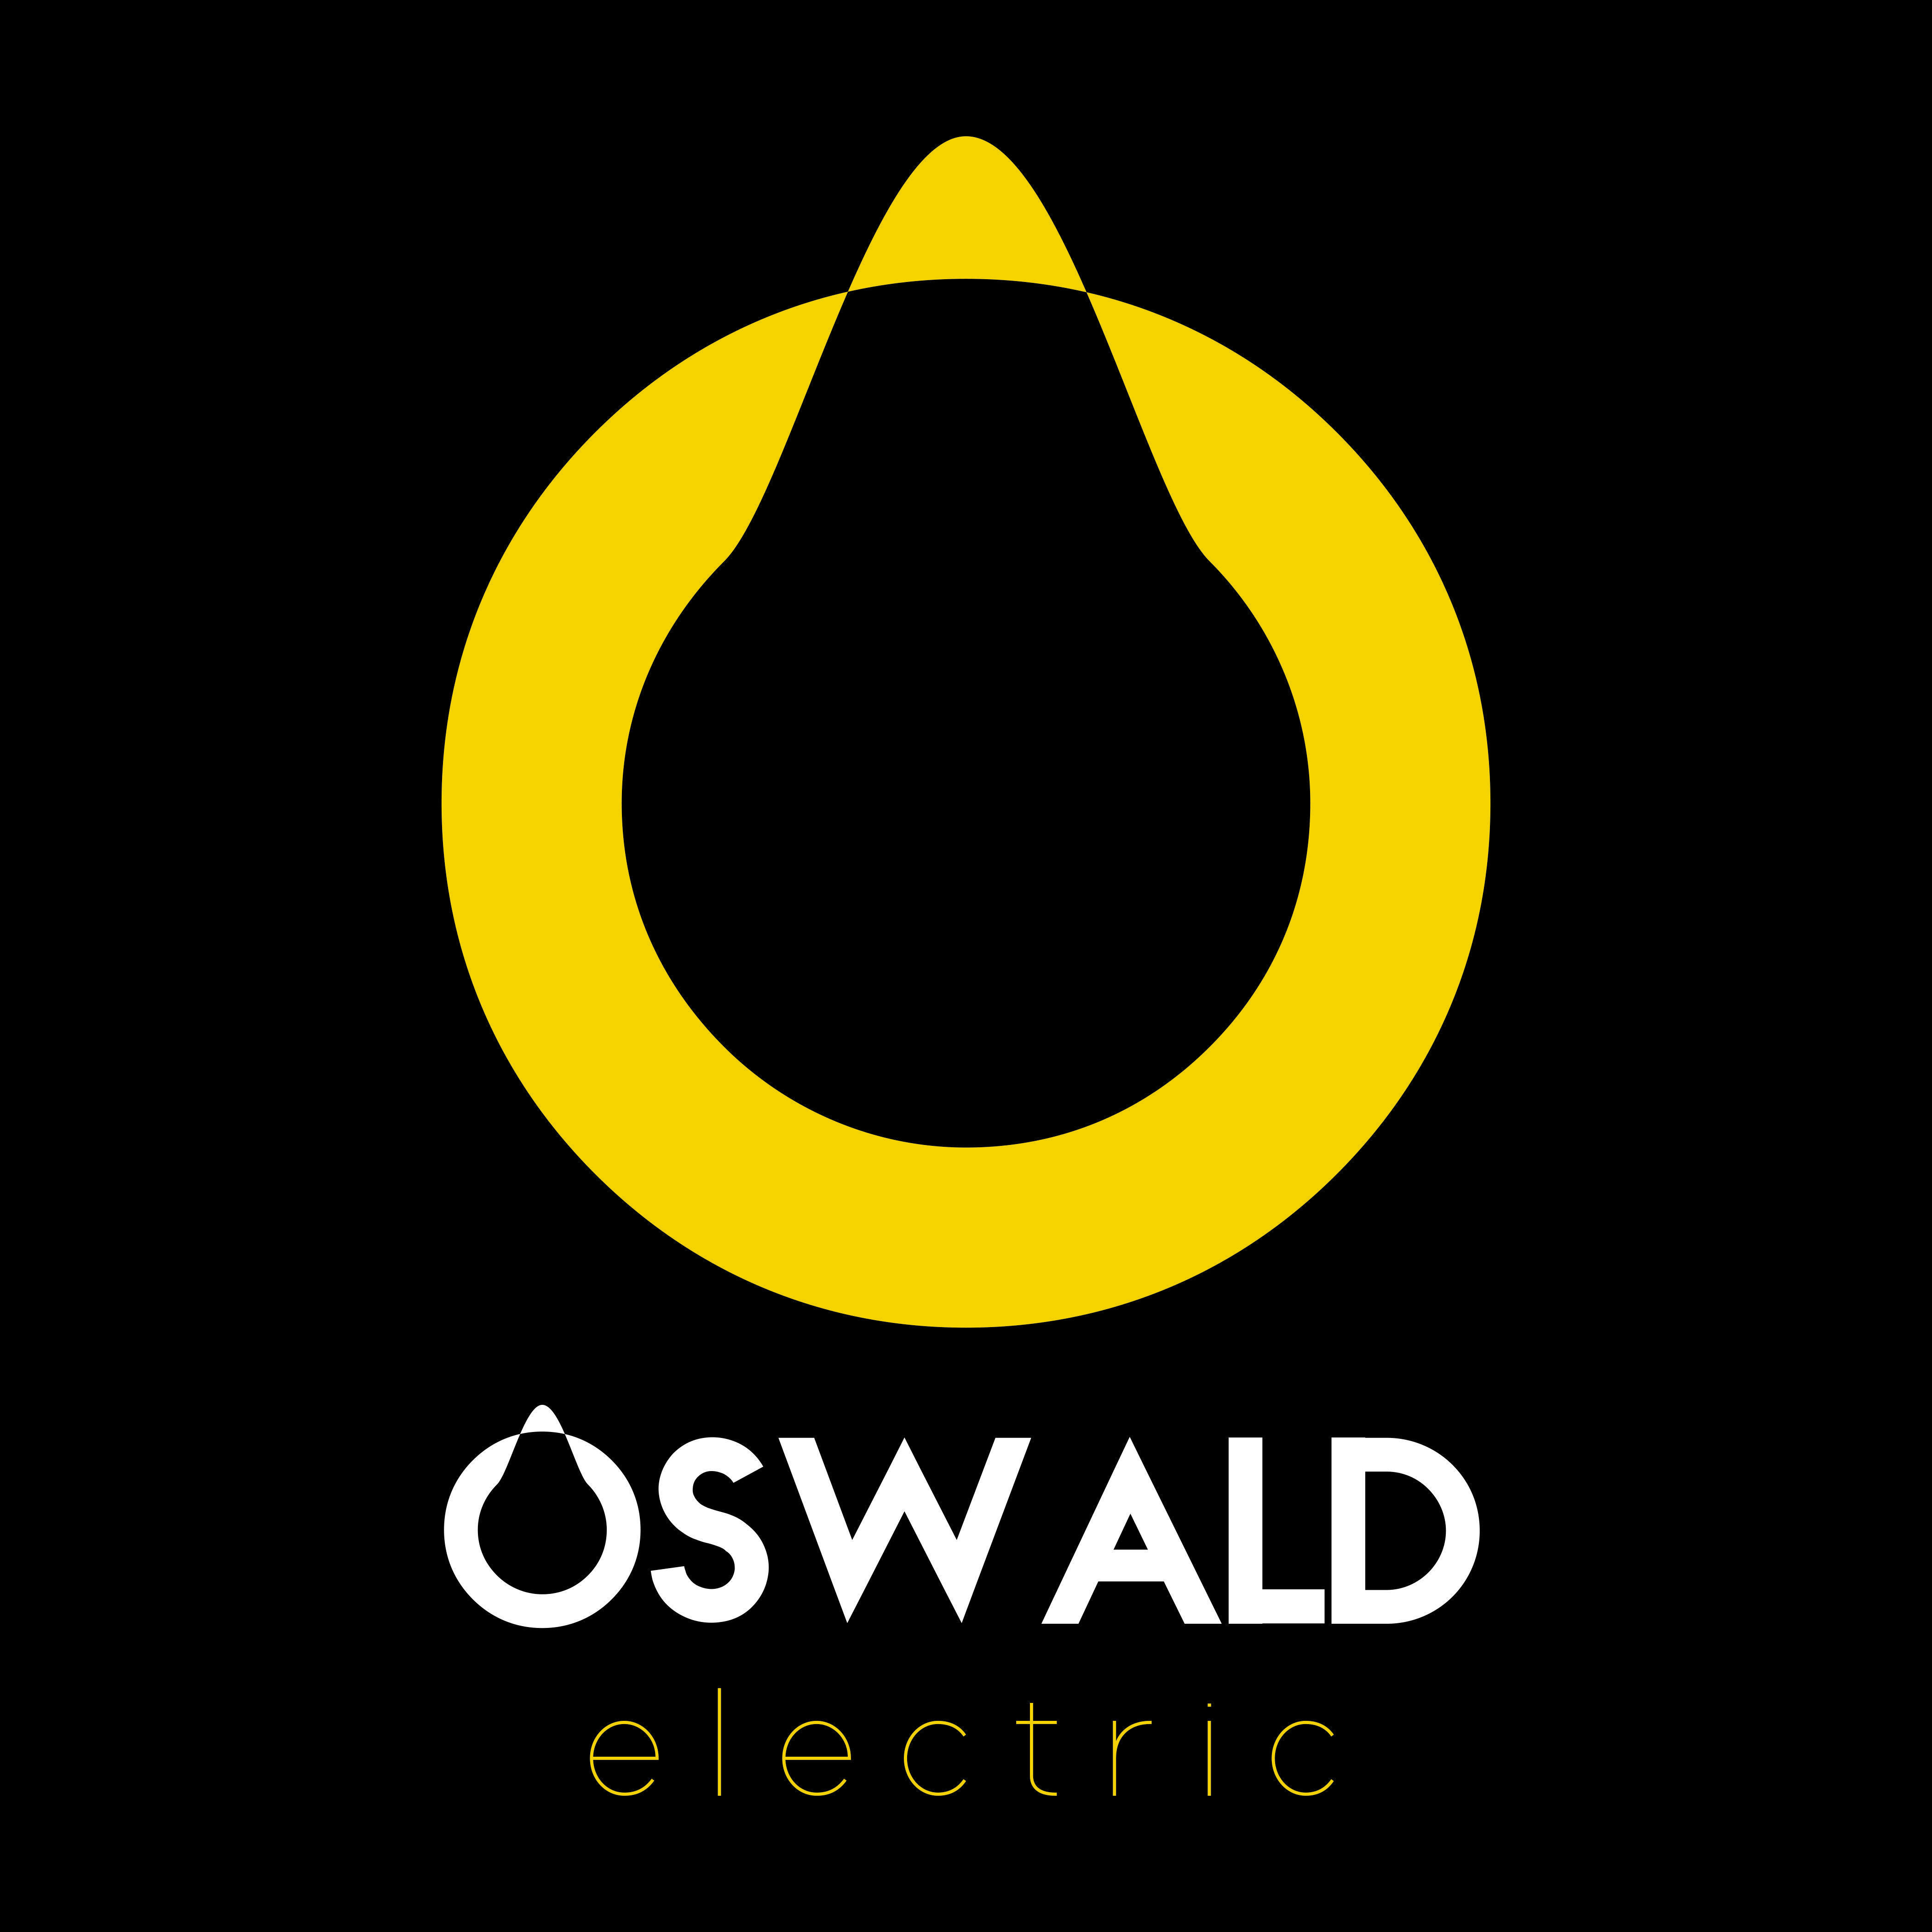 Black and Yellow Company Logo - Oswald Electric, Logo, Yellow, Black, White, Illustrator, Company